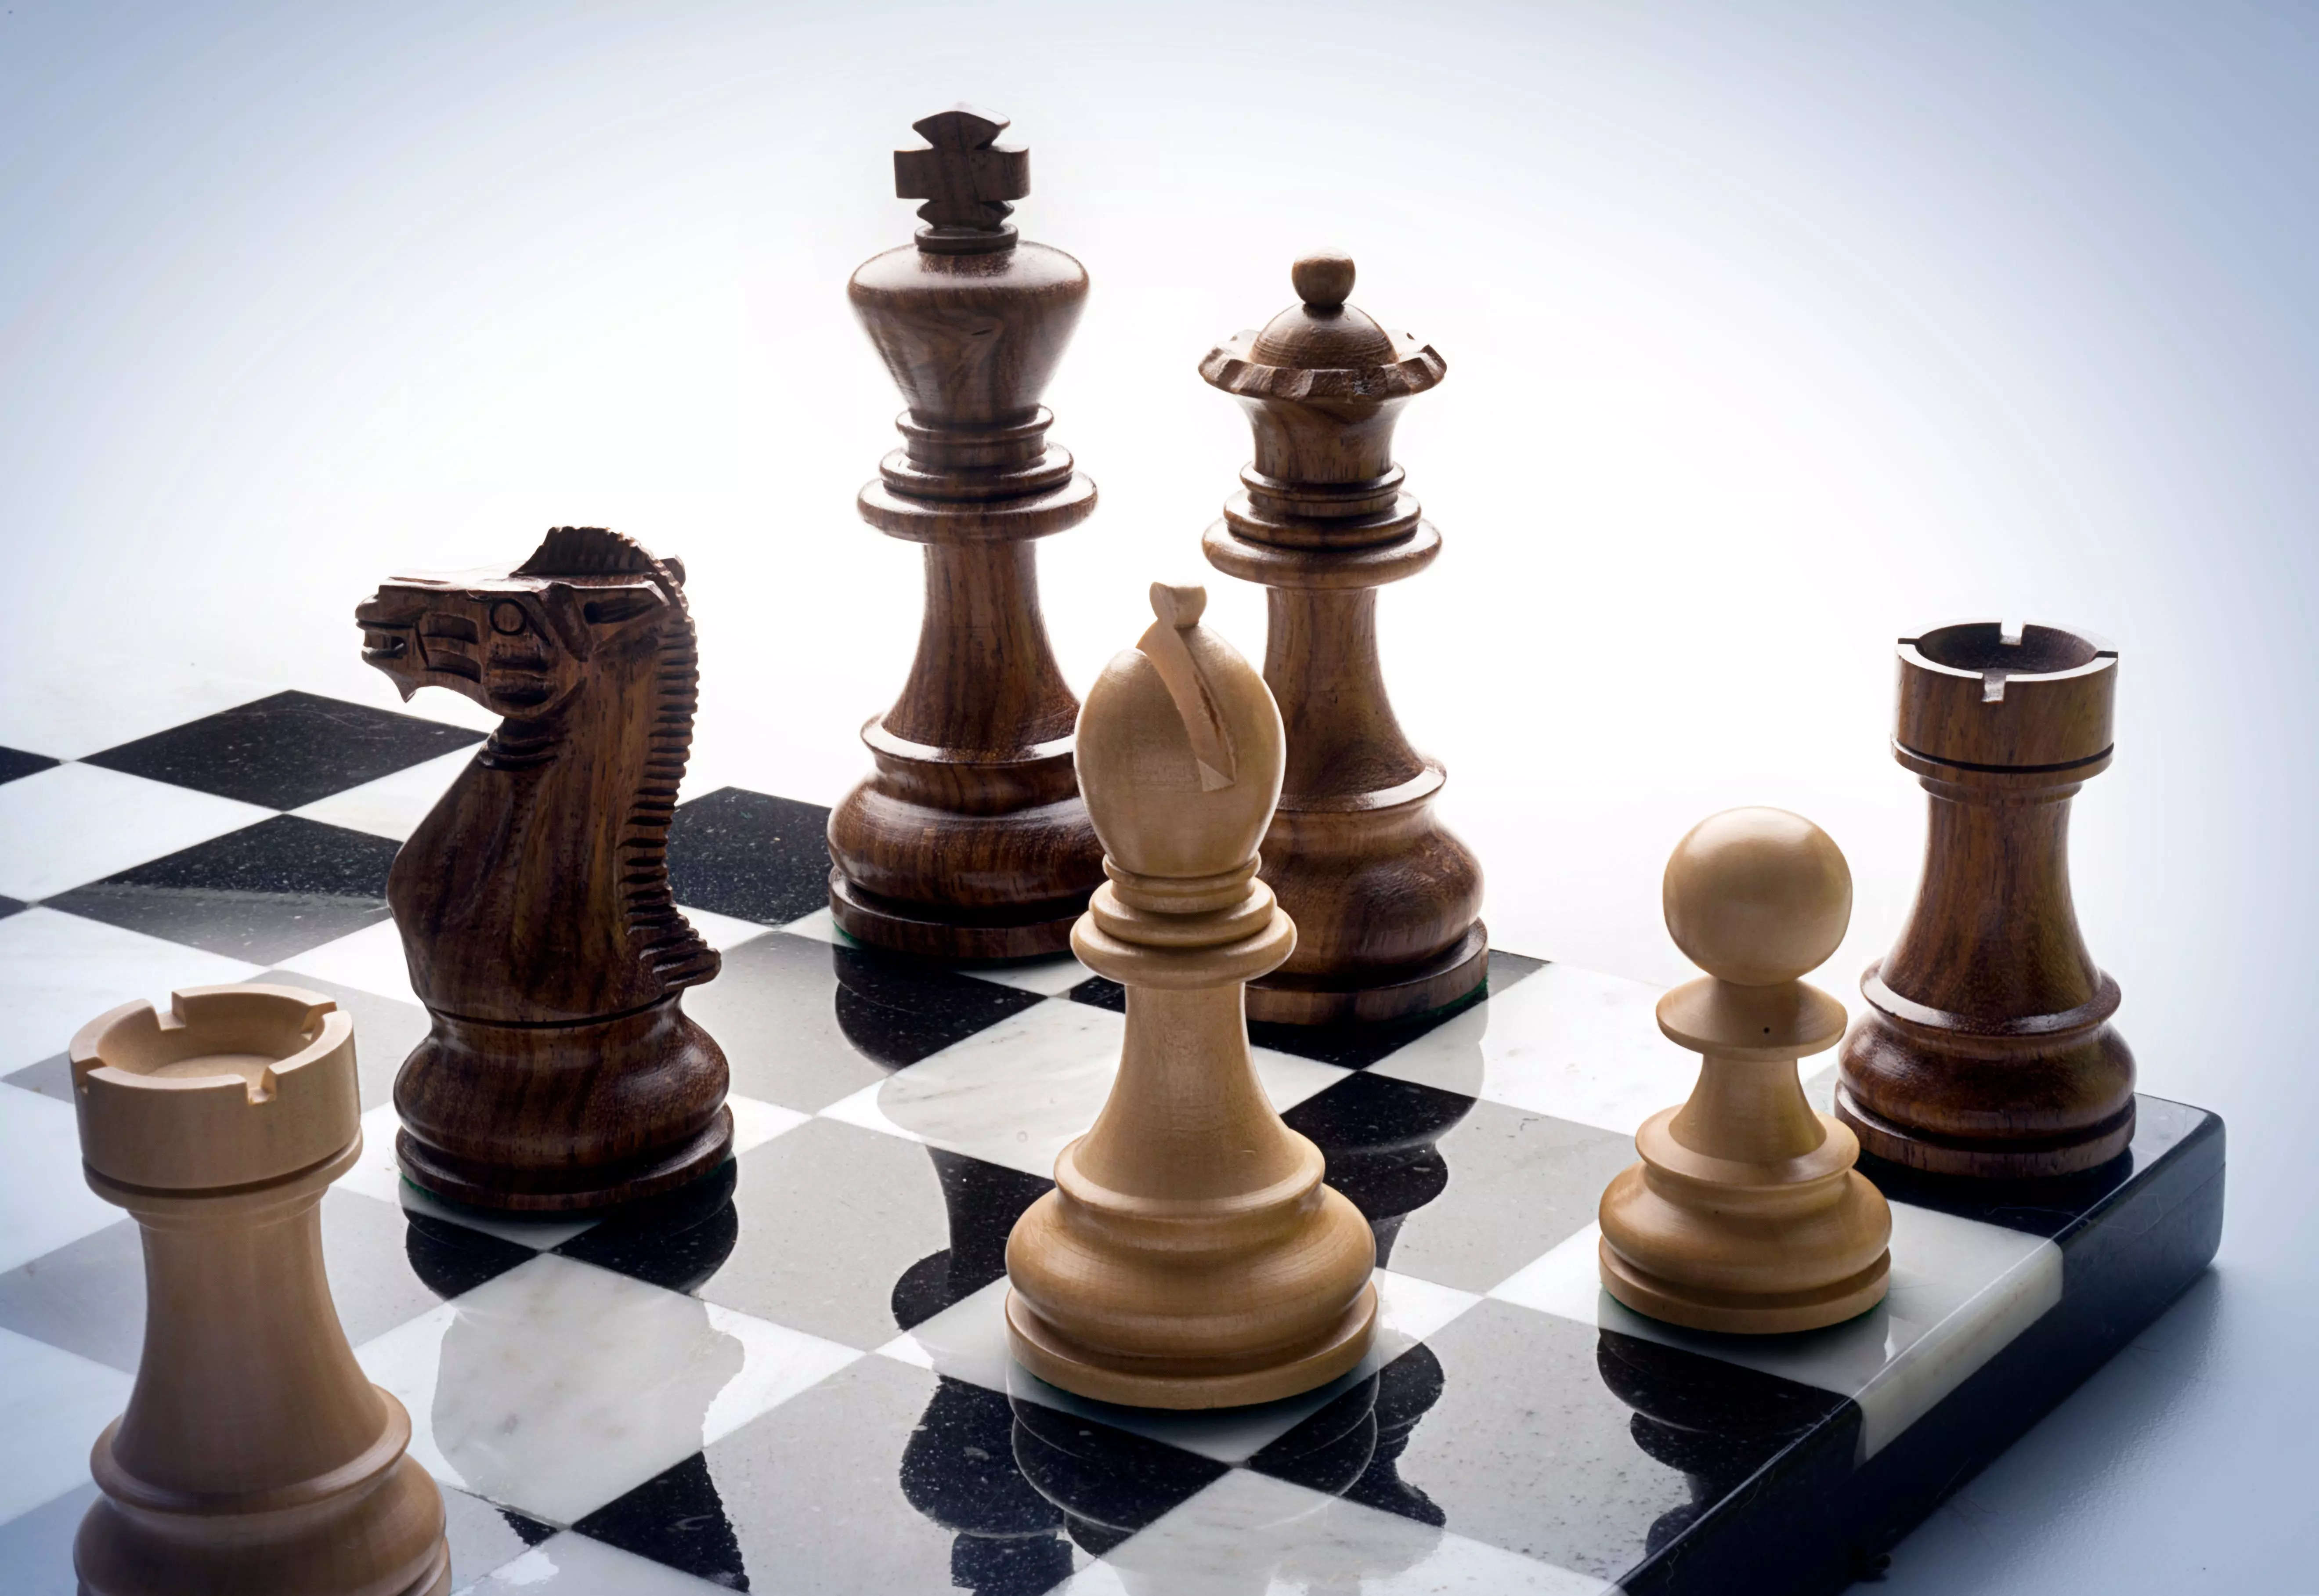 Chess master Hans Niemann denies using sex toy to cheat during high profile  tournament - World News - Mirror Online